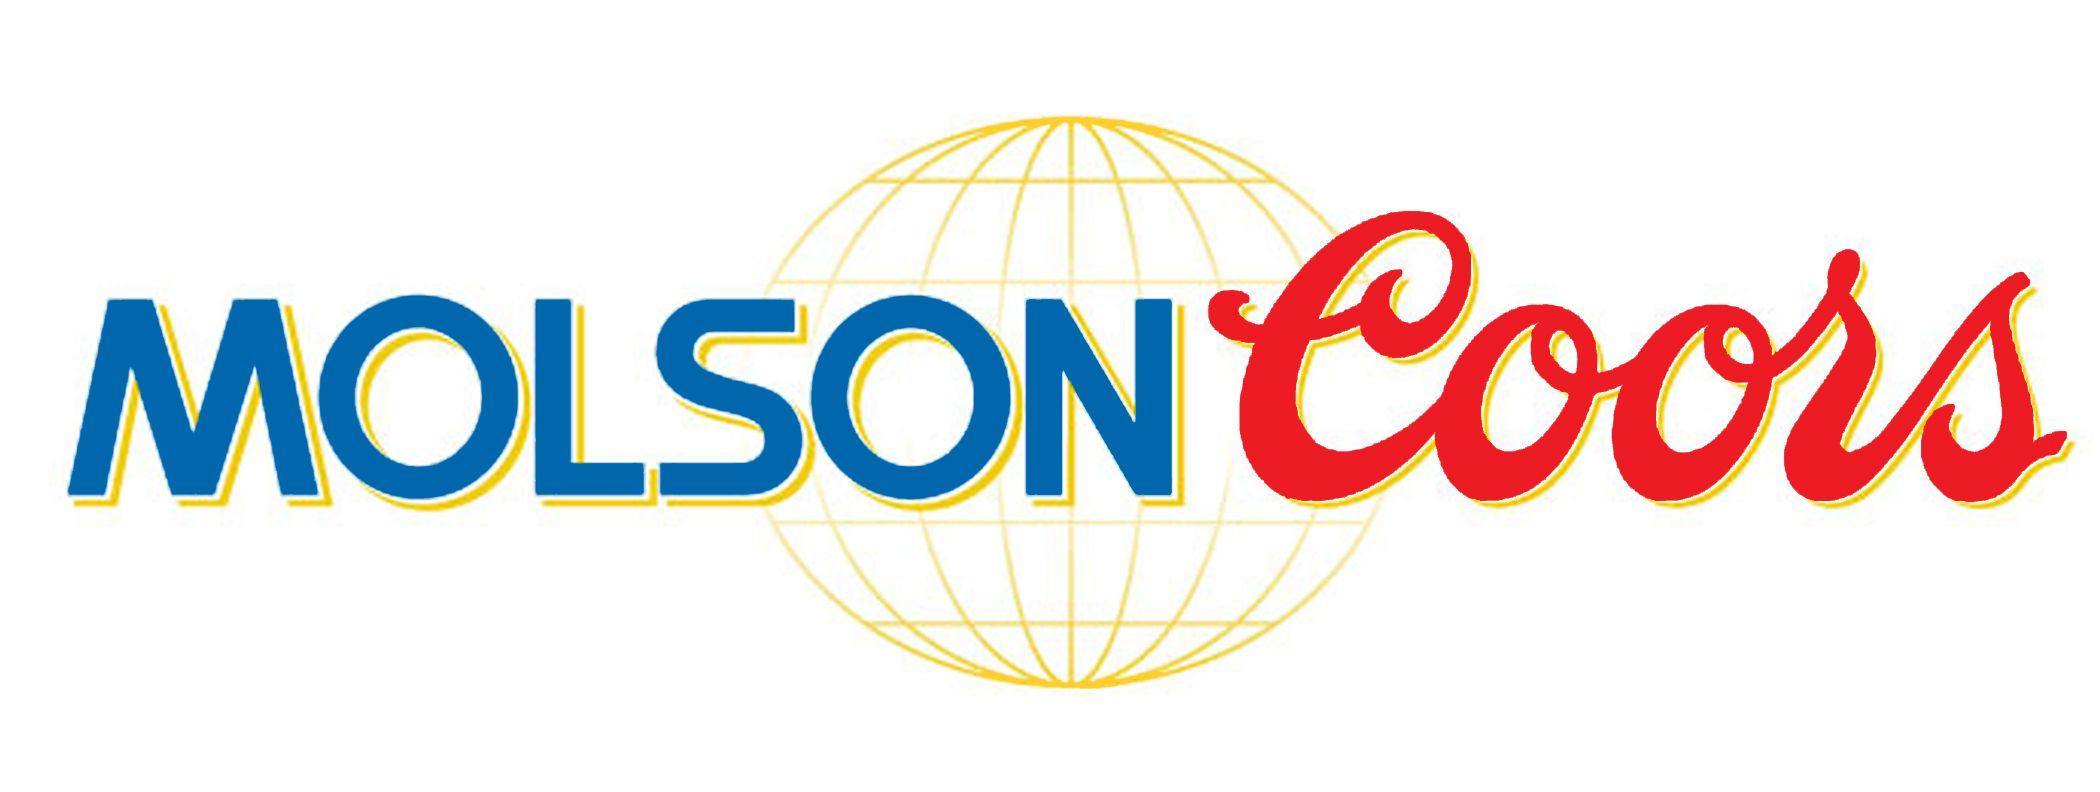 Molson Logo - Molson Coors - Color Logo - 300dpi - Nostalgia - Music Festival